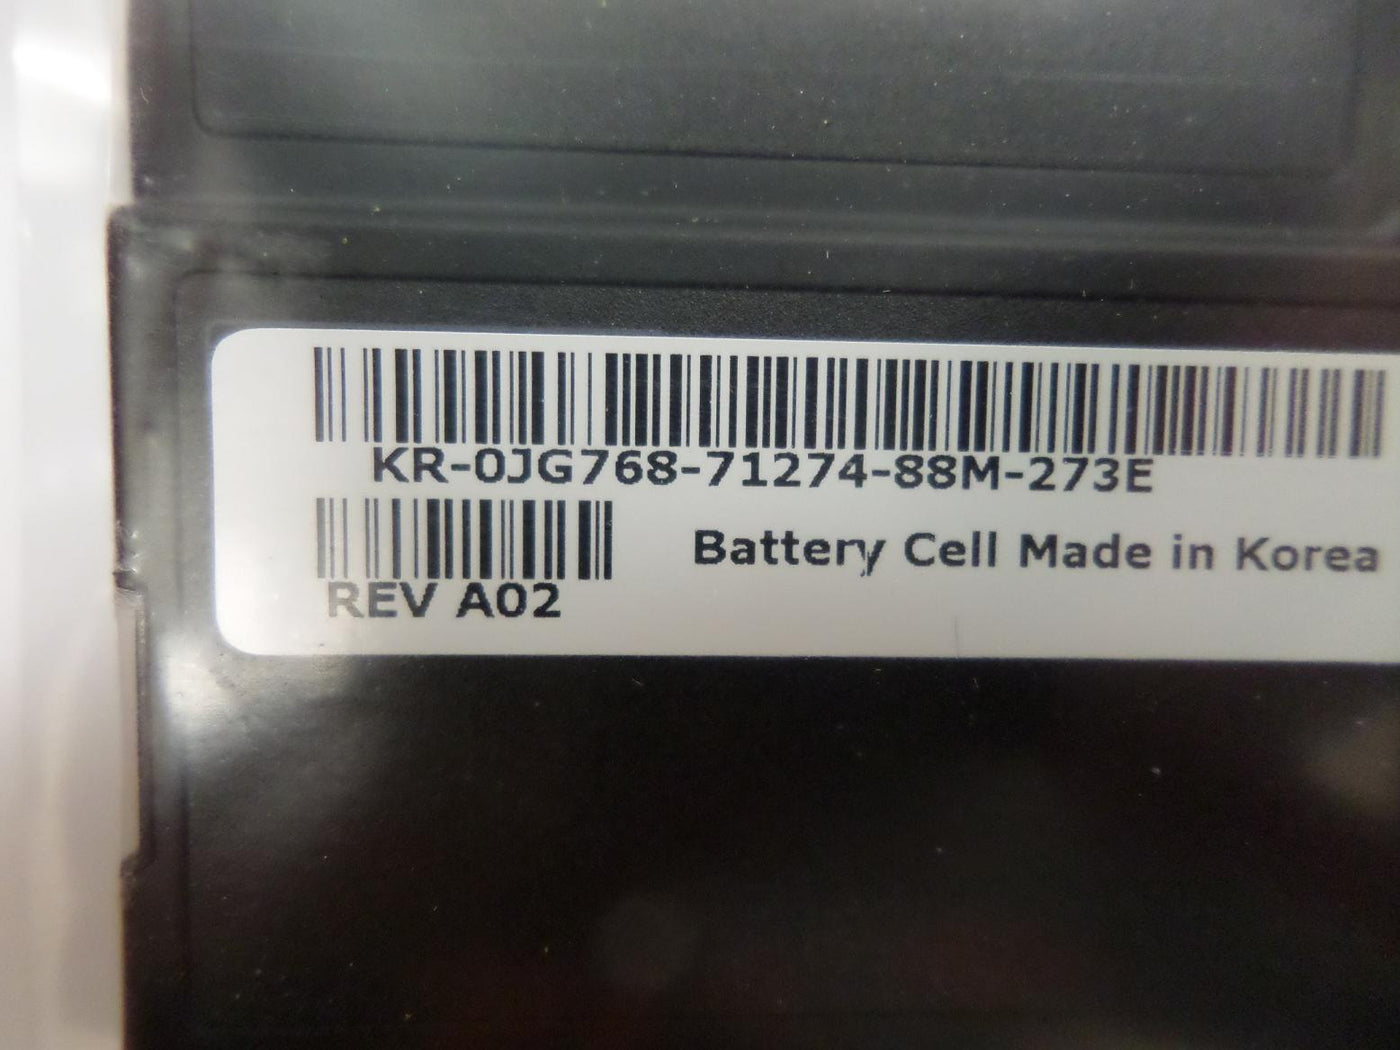 PR25184_0JG768_Dell D420 D430 Extended Life Battery - Image3